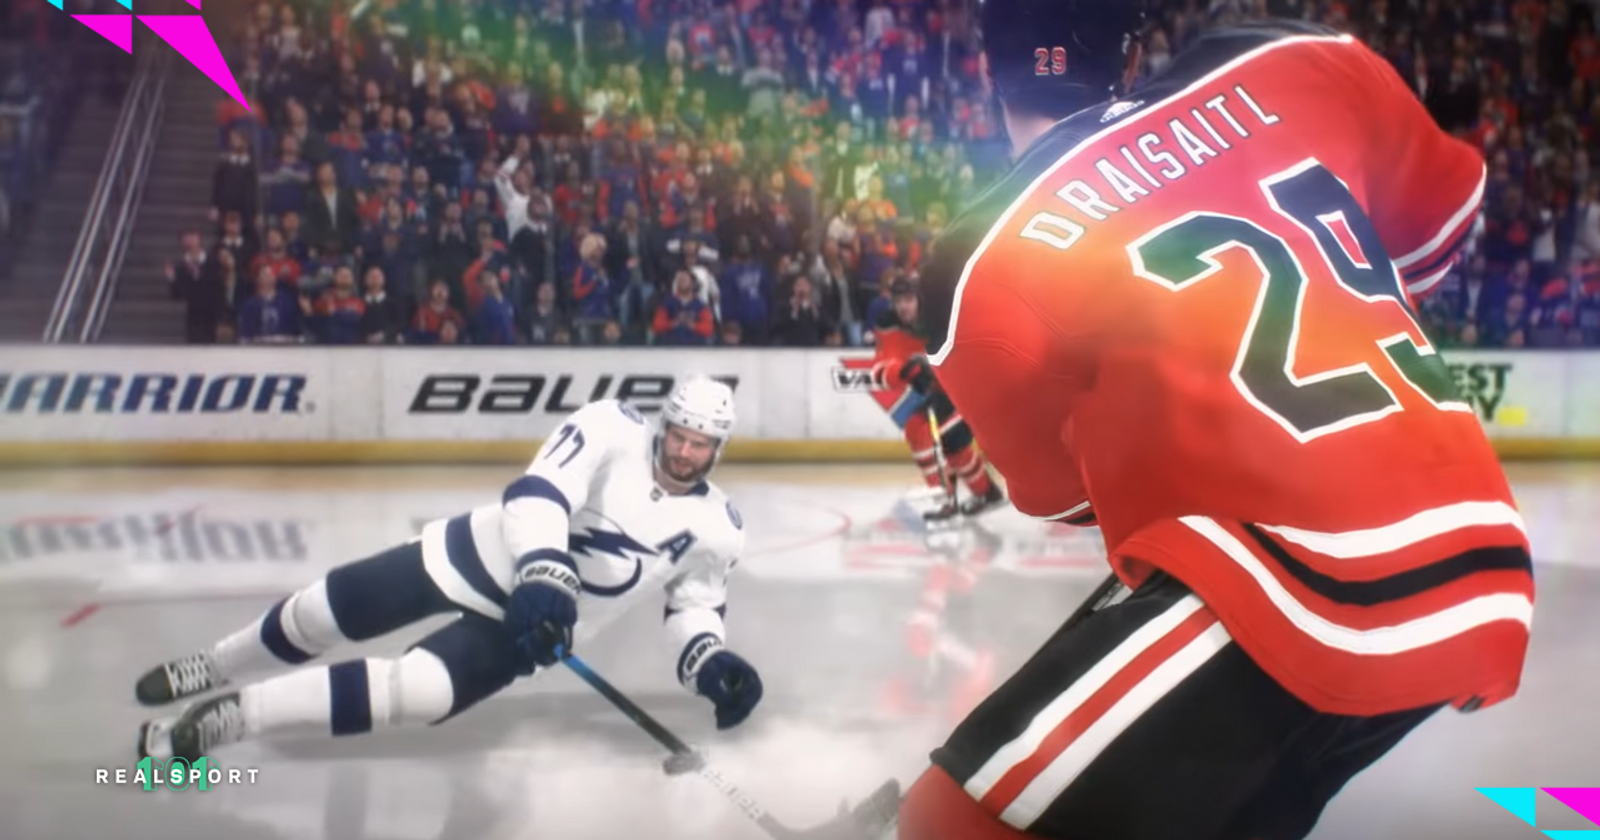 NHL 22 Gameplay Trailer